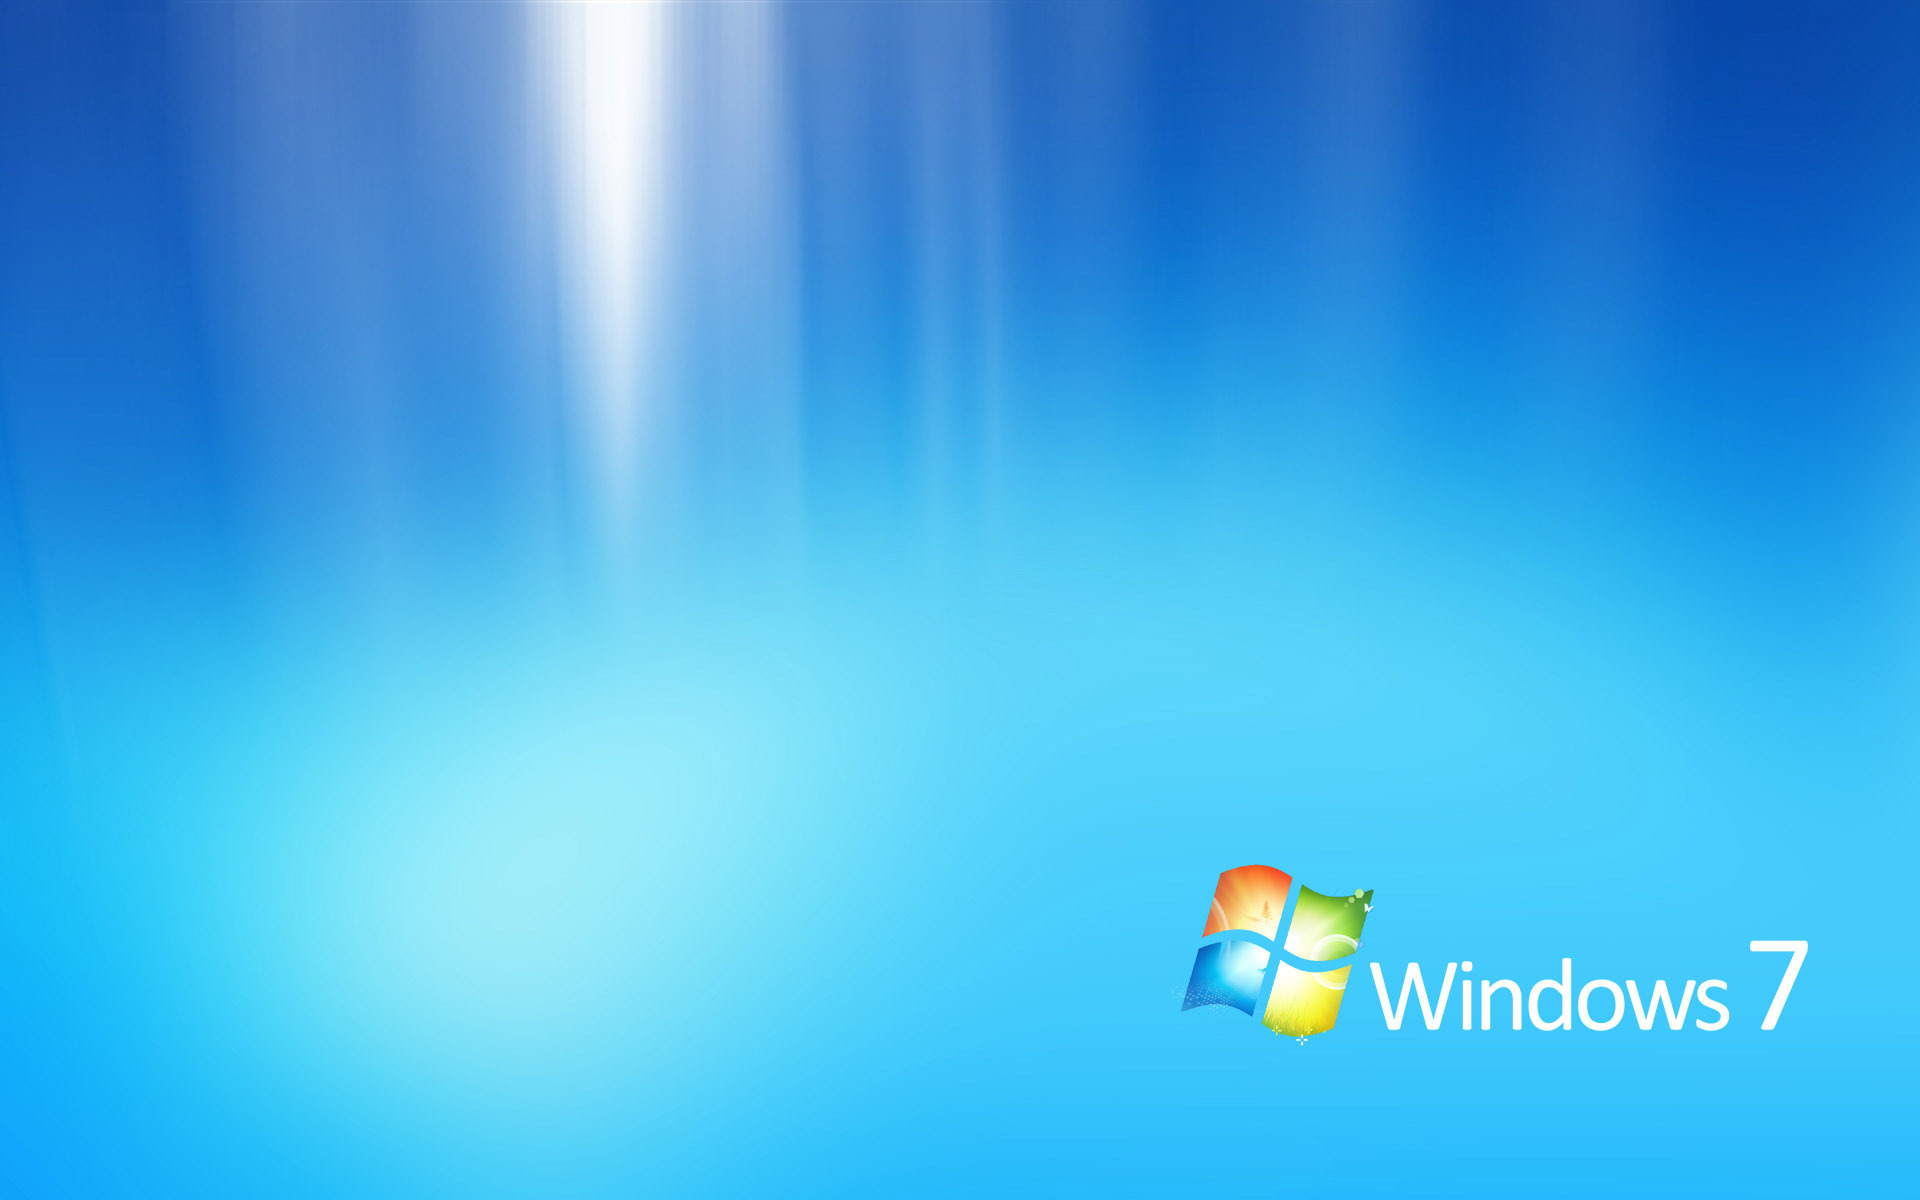 Windows 7 Wallpaper Blue News and entertainment: windows 7 jan 06 